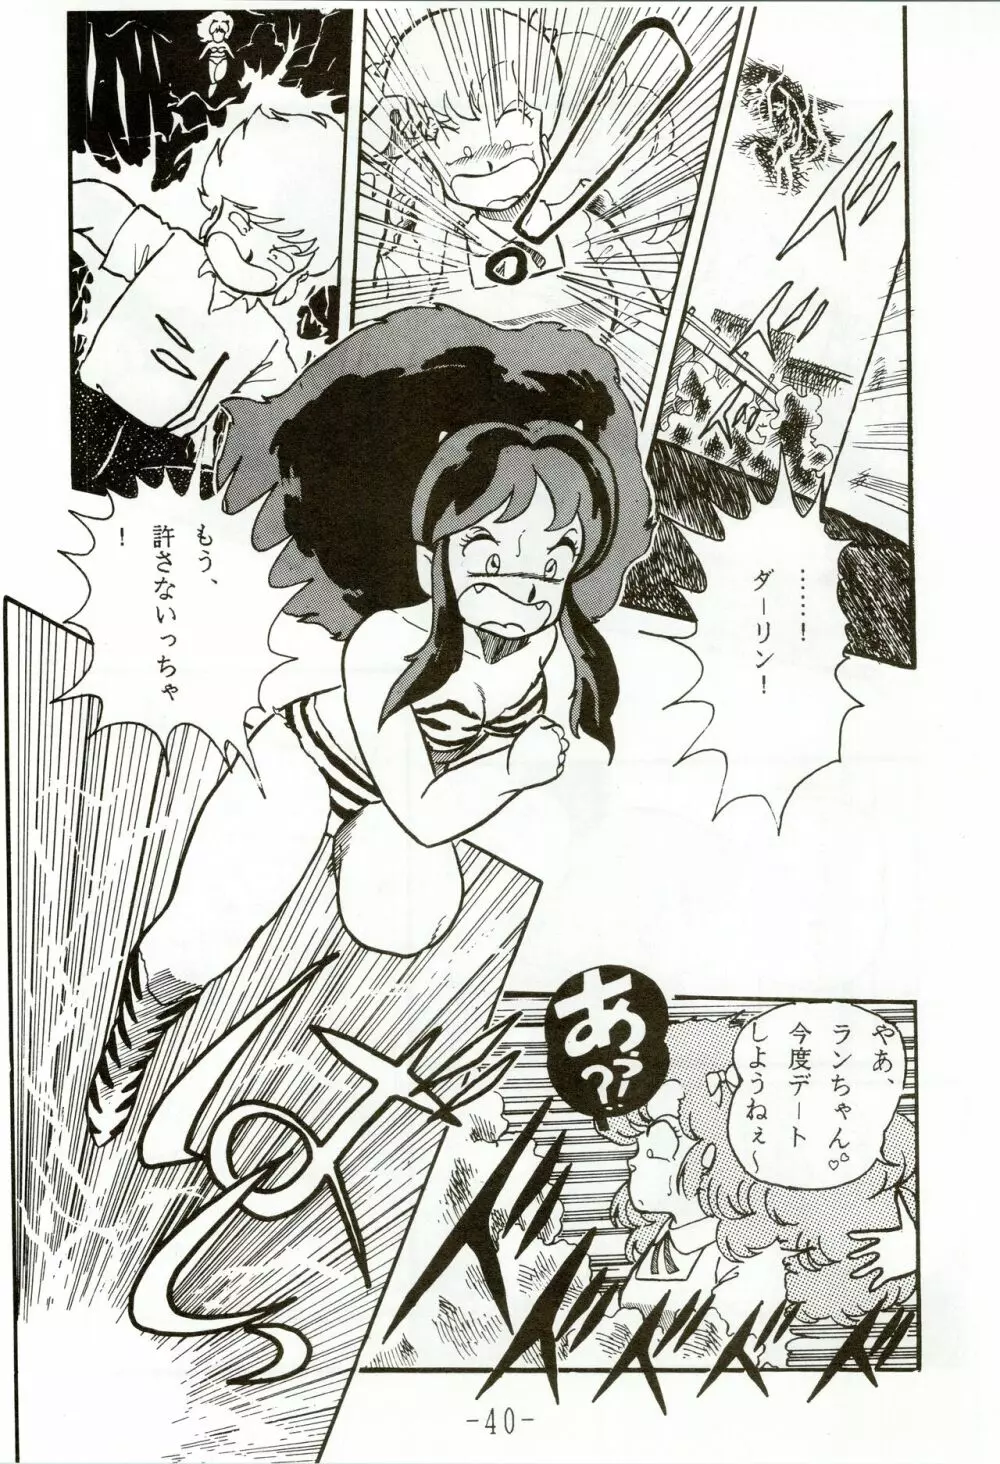 甲冑伝説 - page40